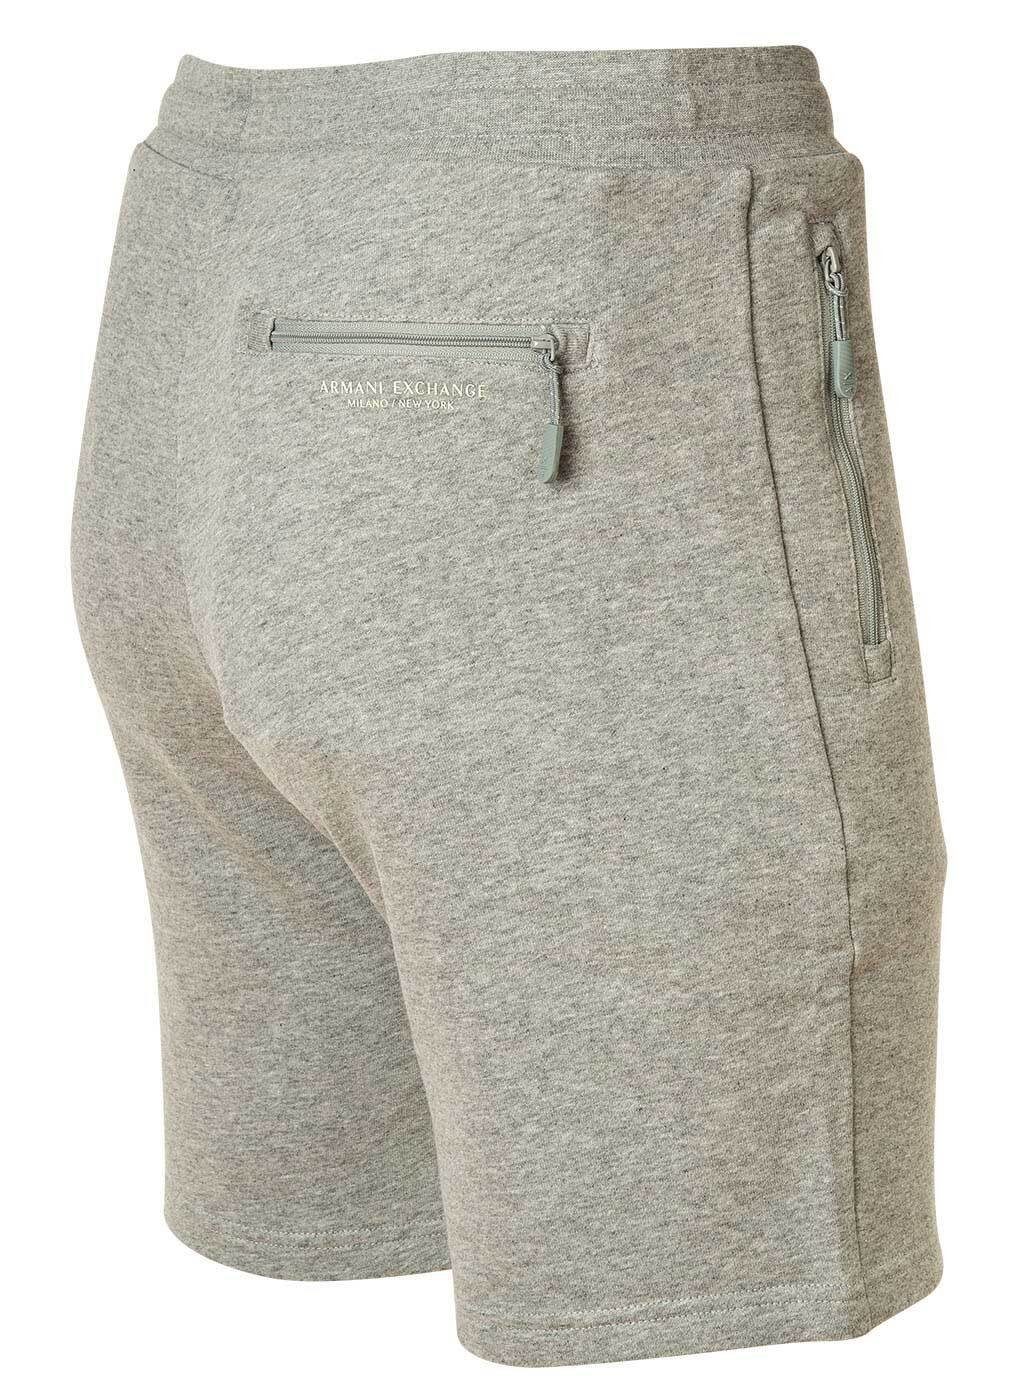 Jogginghose EXCHANGE Loungewear Pants, kurz Herren Sweatshorts - Grau ARMANI